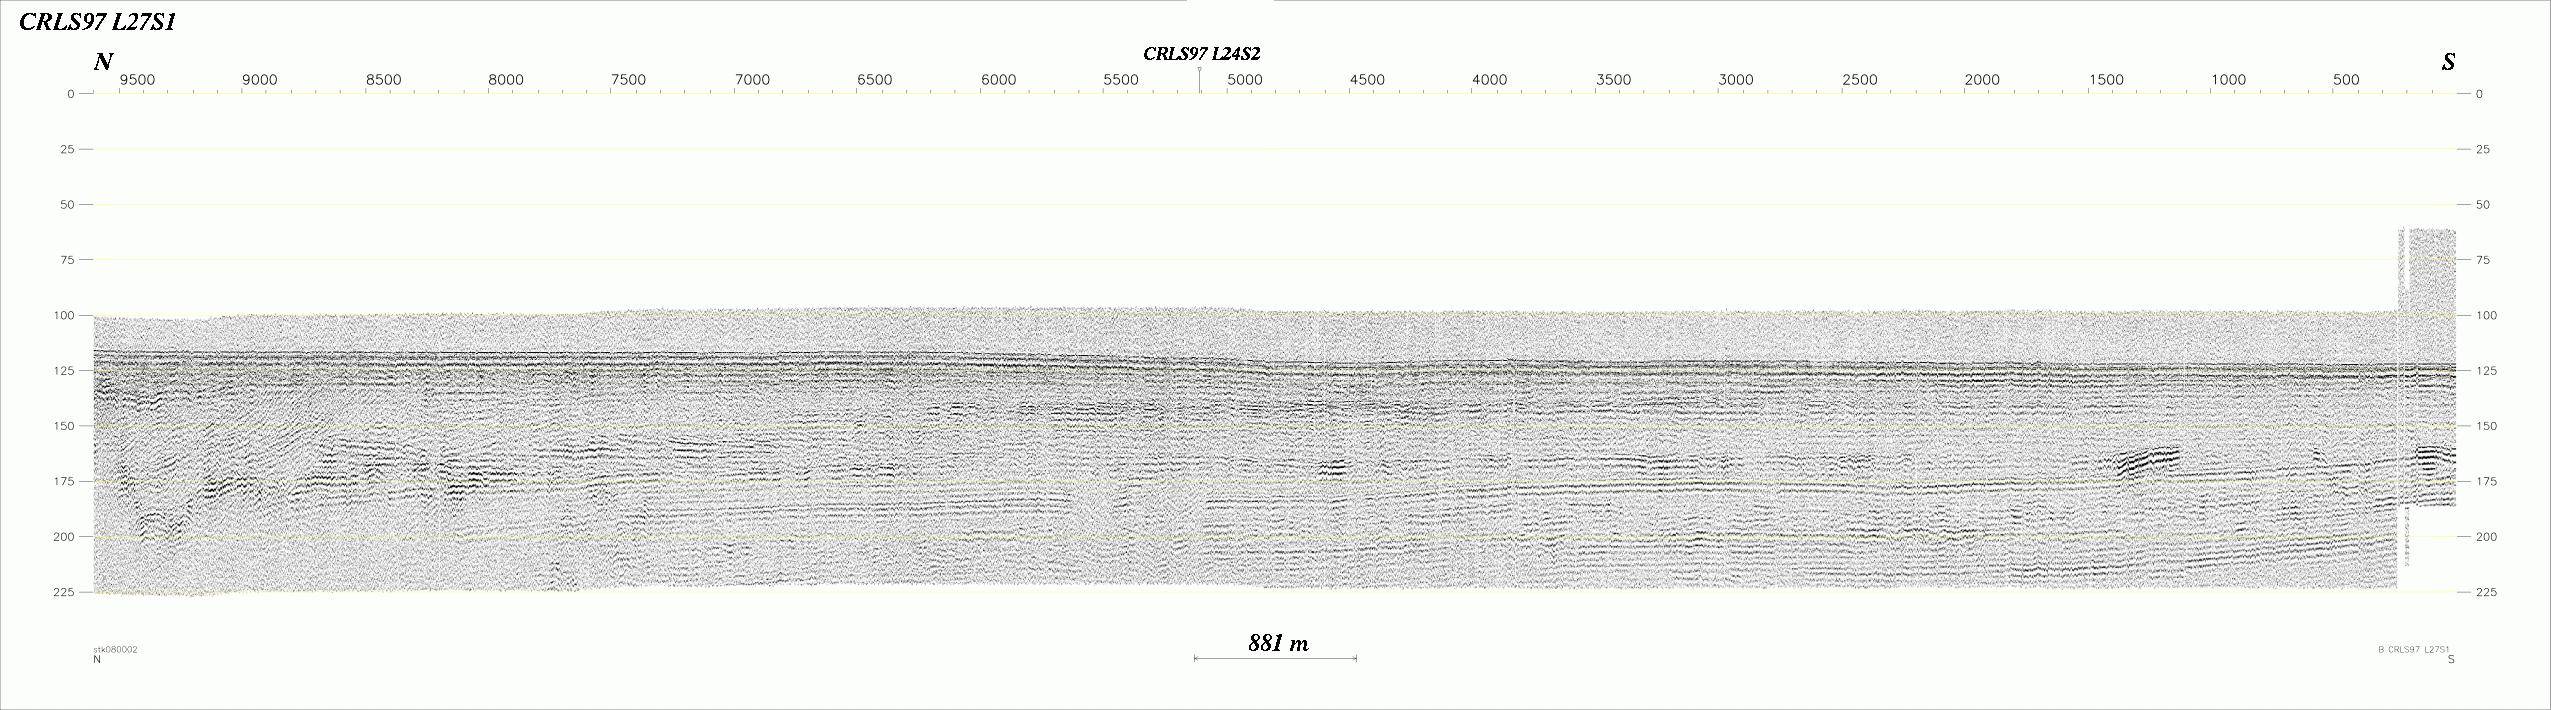 Seismic Reflection Profile Line No.: L27s1 (315121 bytes)